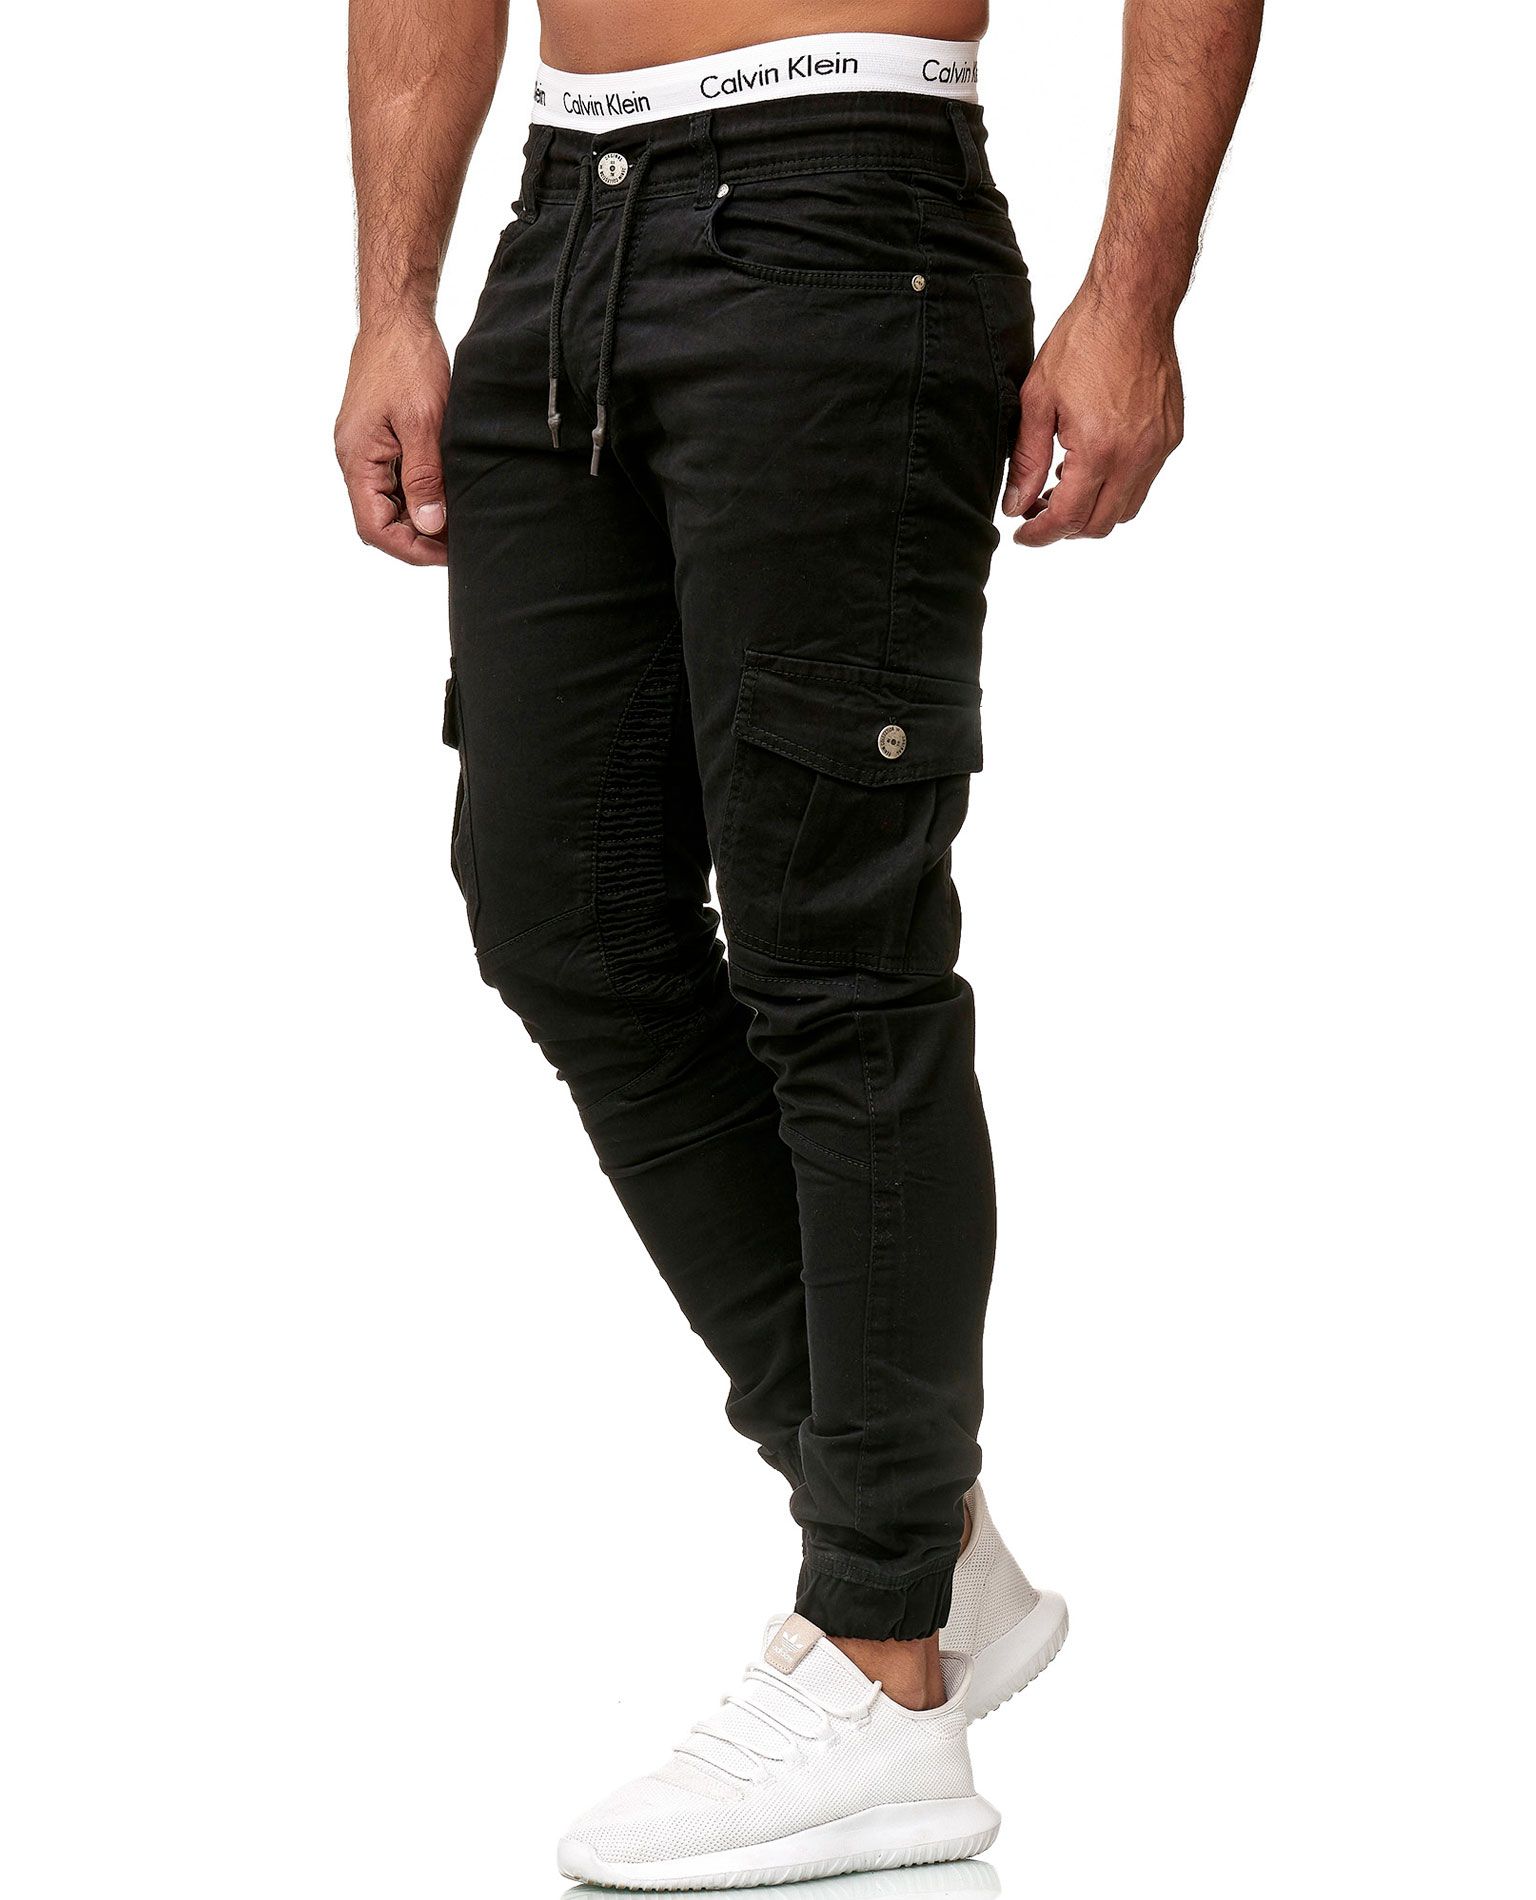 Mike Black Pants L32 Jerone - 3207 - Jeans - Jerone.com